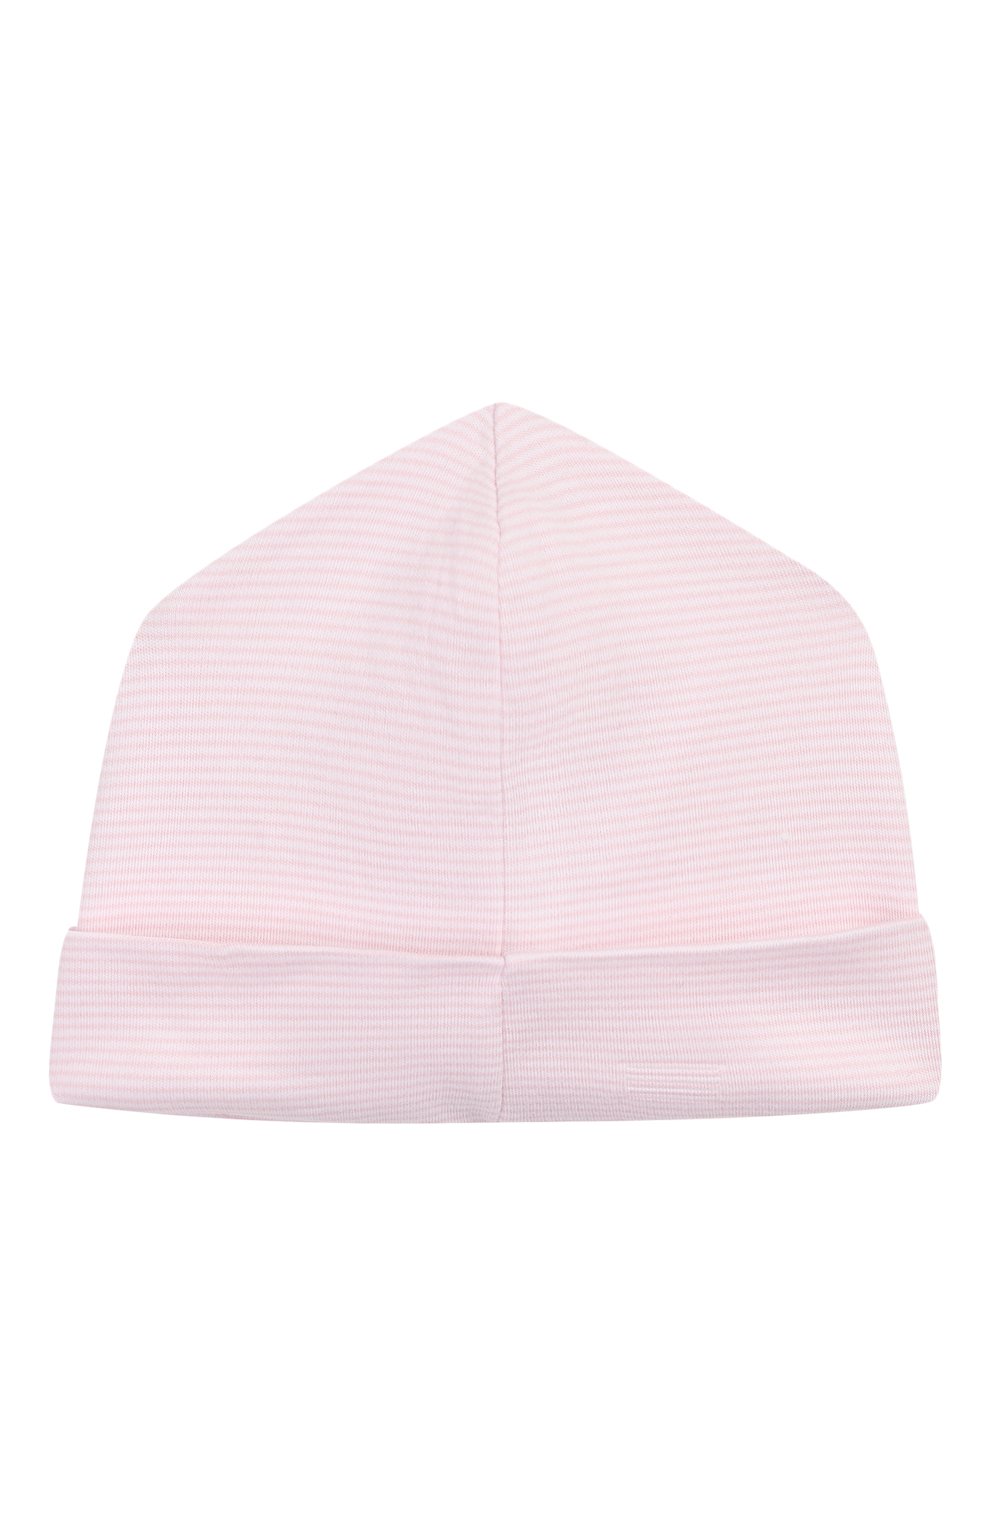 Детского хлопковая шапка KISSY KISSY розового цвета, арт. KG504447N | Фото 2 (Материал: Текстиль, Хлопок; Кросс-КТ НВ: Шапочки-аксессуары)